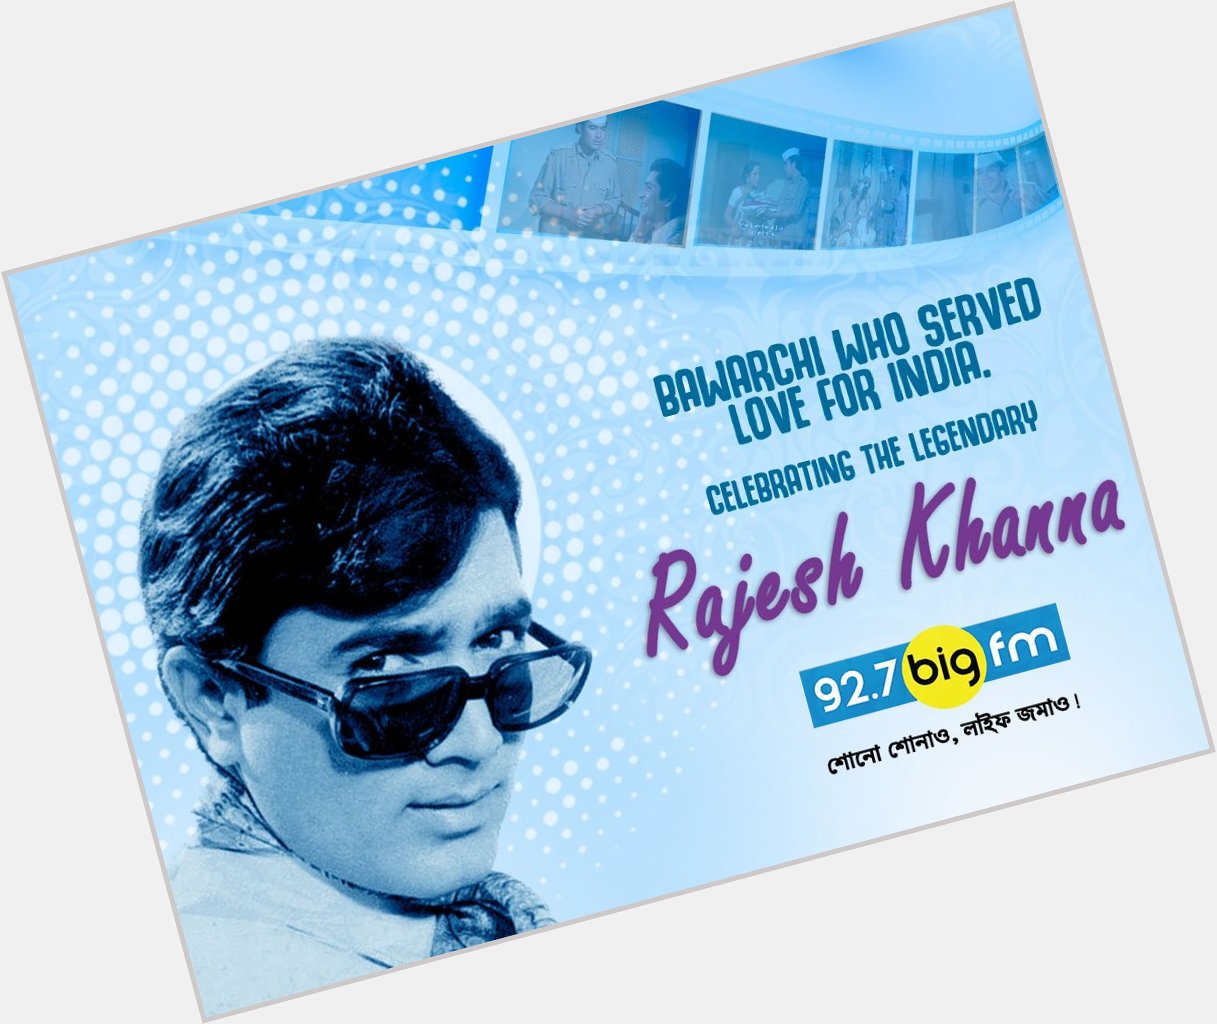 Happy birthday to the first superstar Rajesh khanna!   